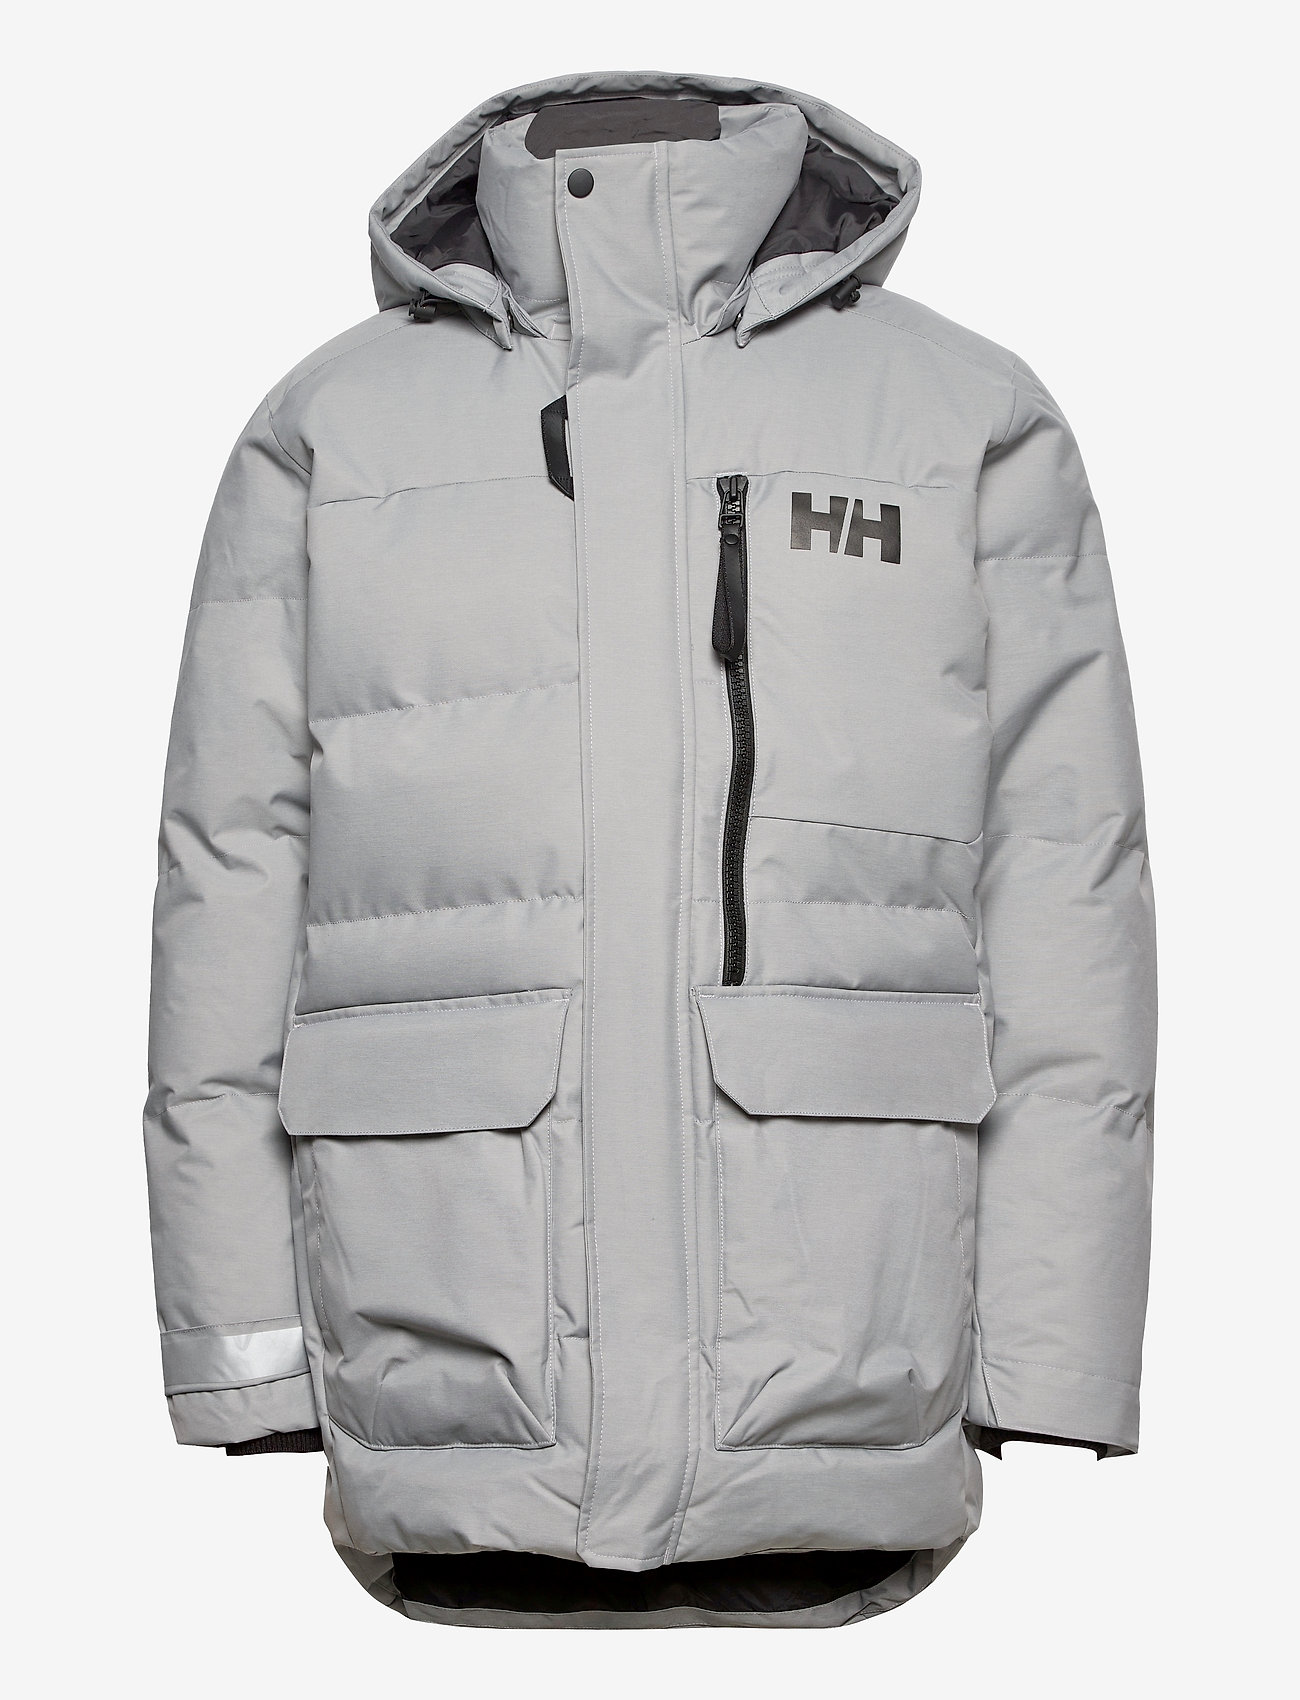 Helly Hansen Tromsoe - Padded jackets | Boozt.com